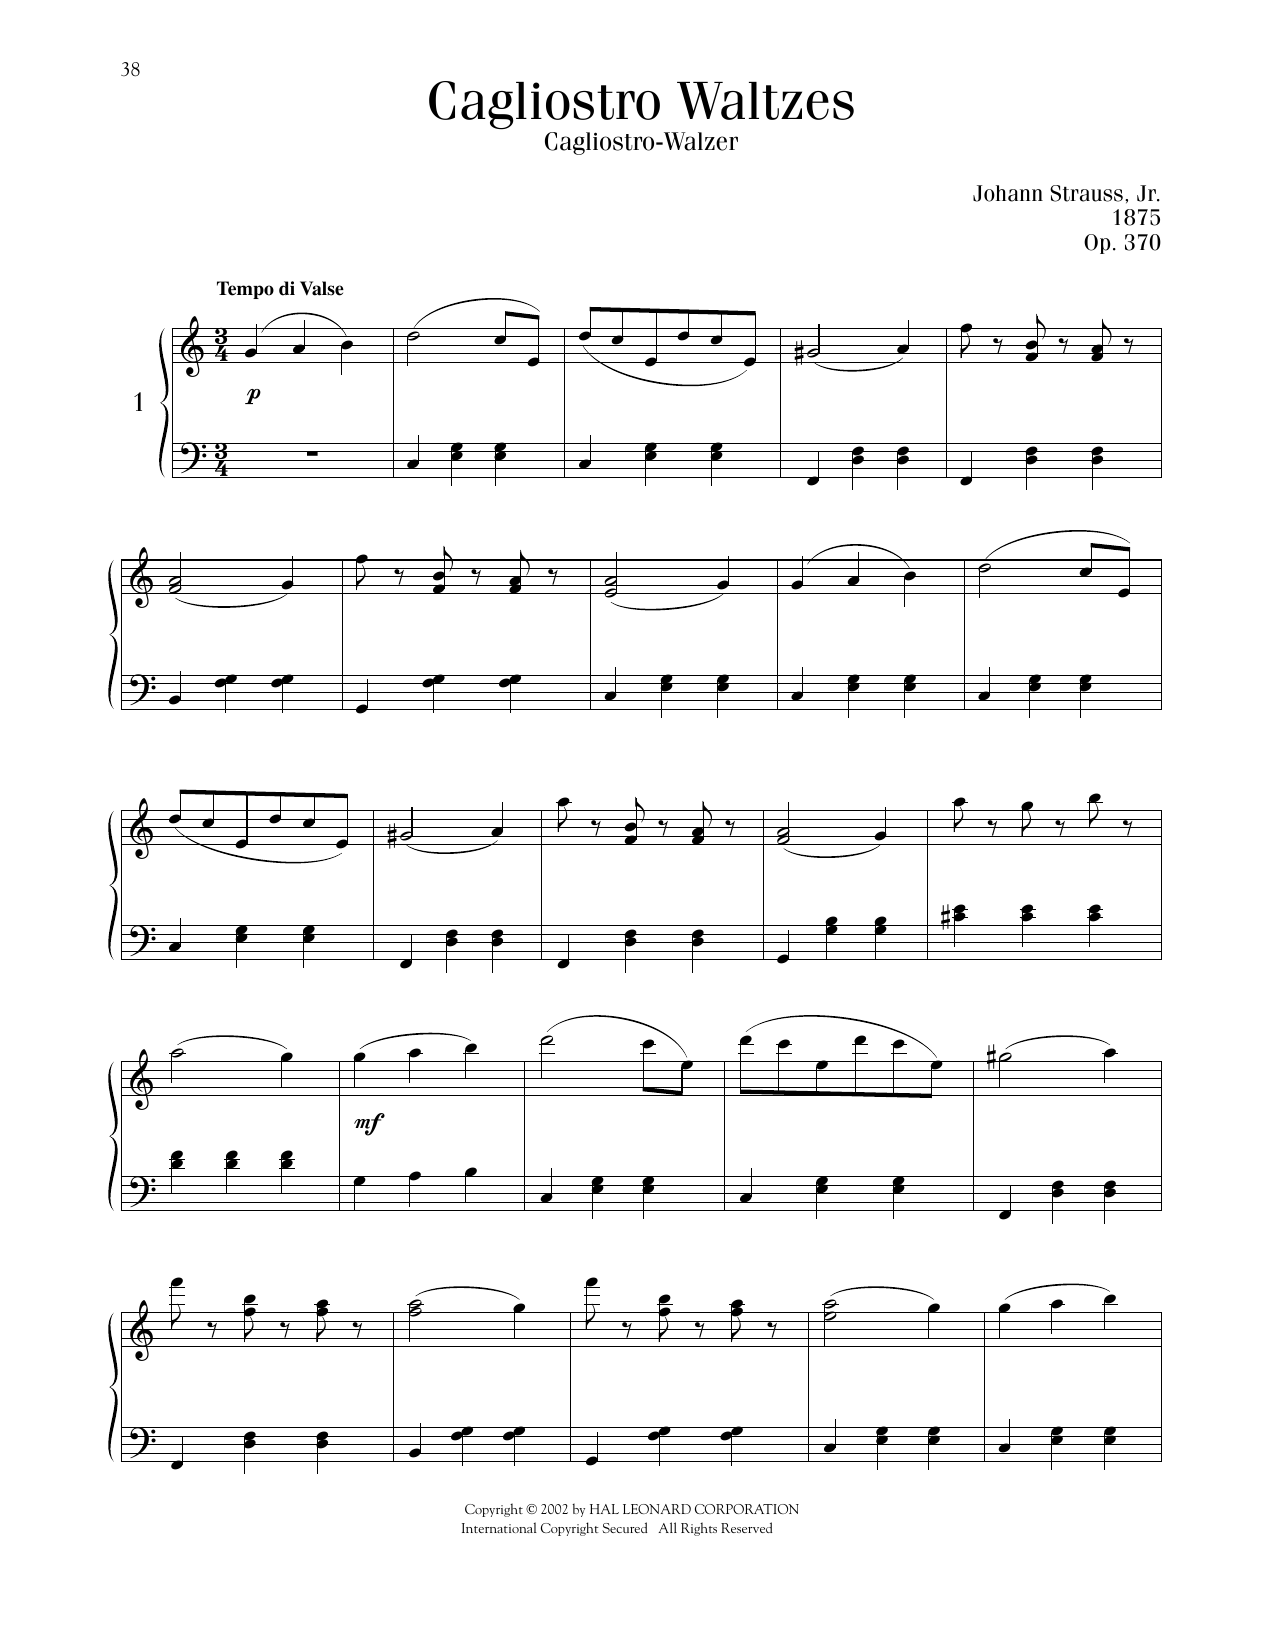 Johann Strauss Cagliostro Waltzes, Op. 370 sheet music notes printable PDF score